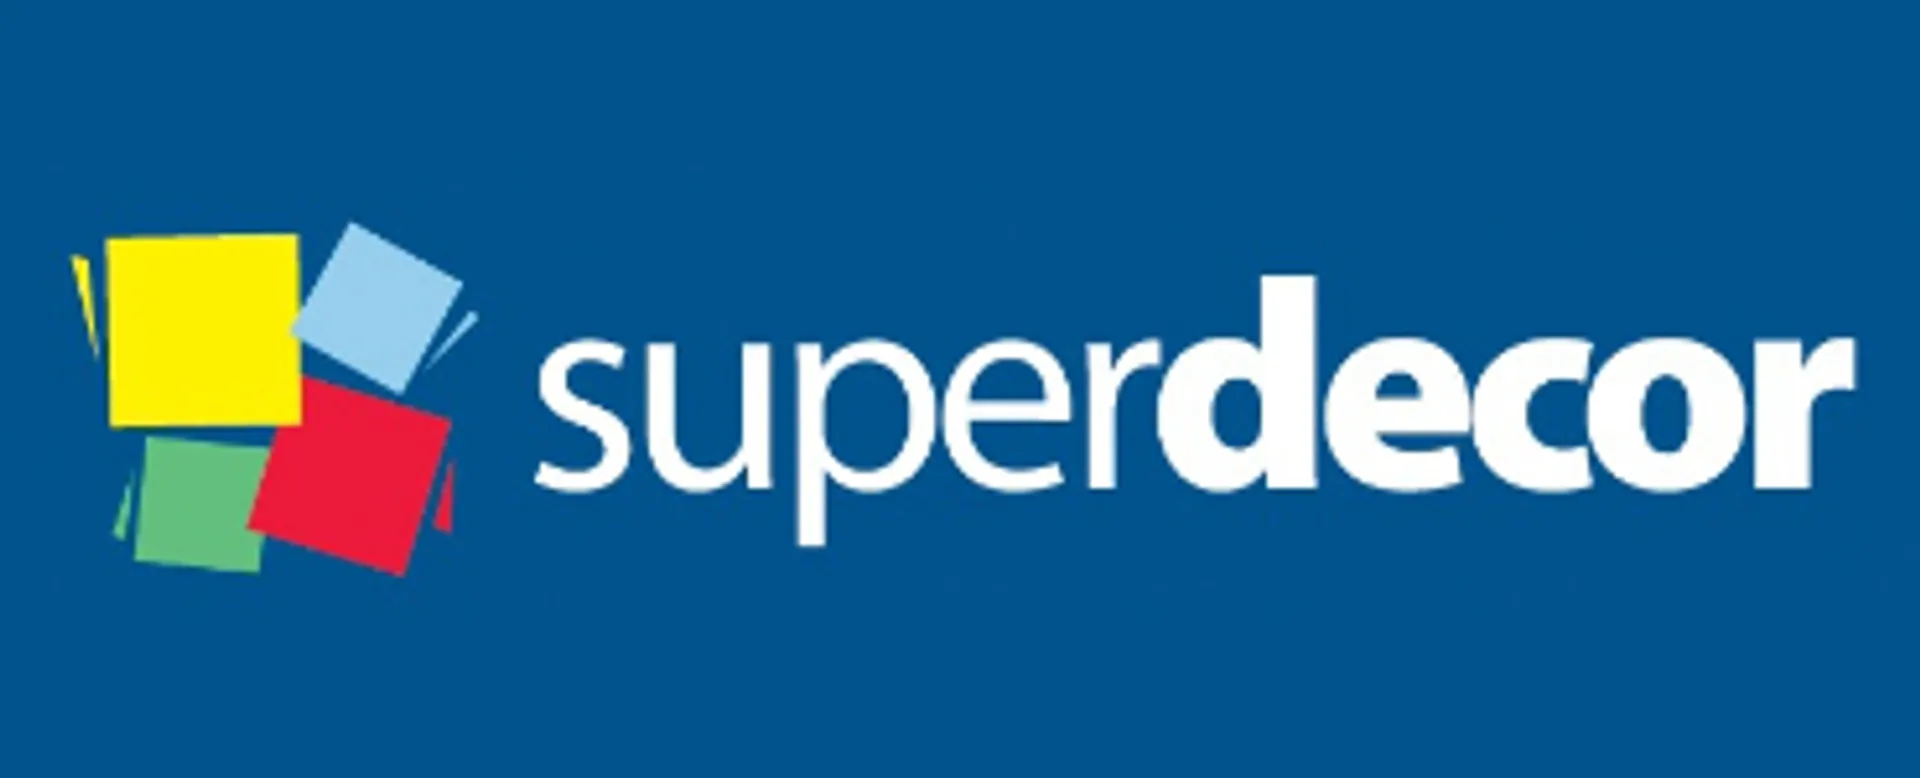 Superdecor logo